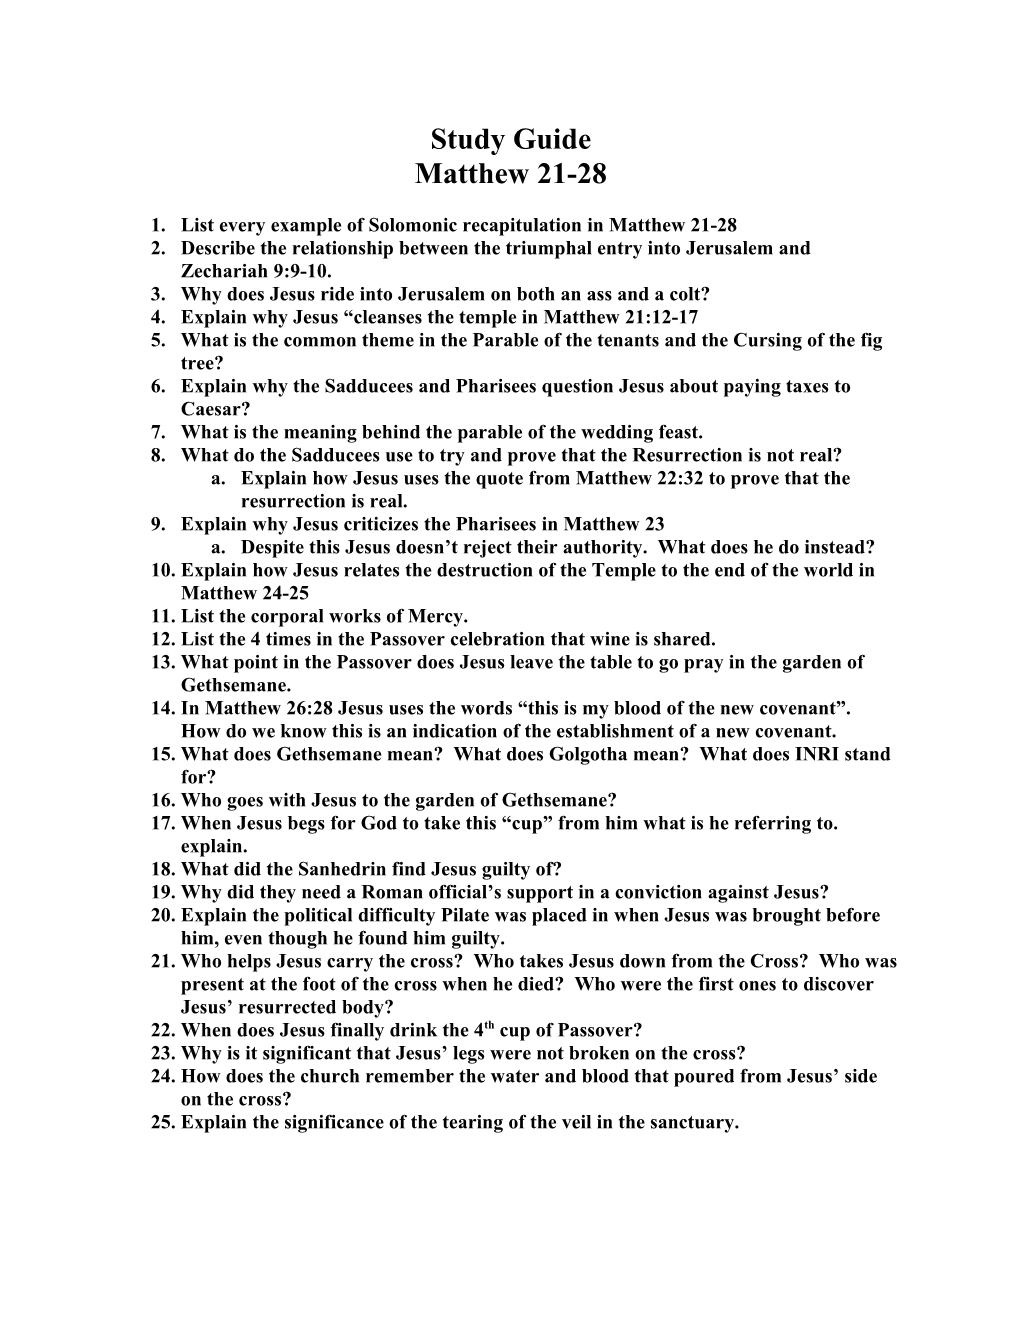 List Every Example of Solomonic Recapitulation in Matthew 21-28